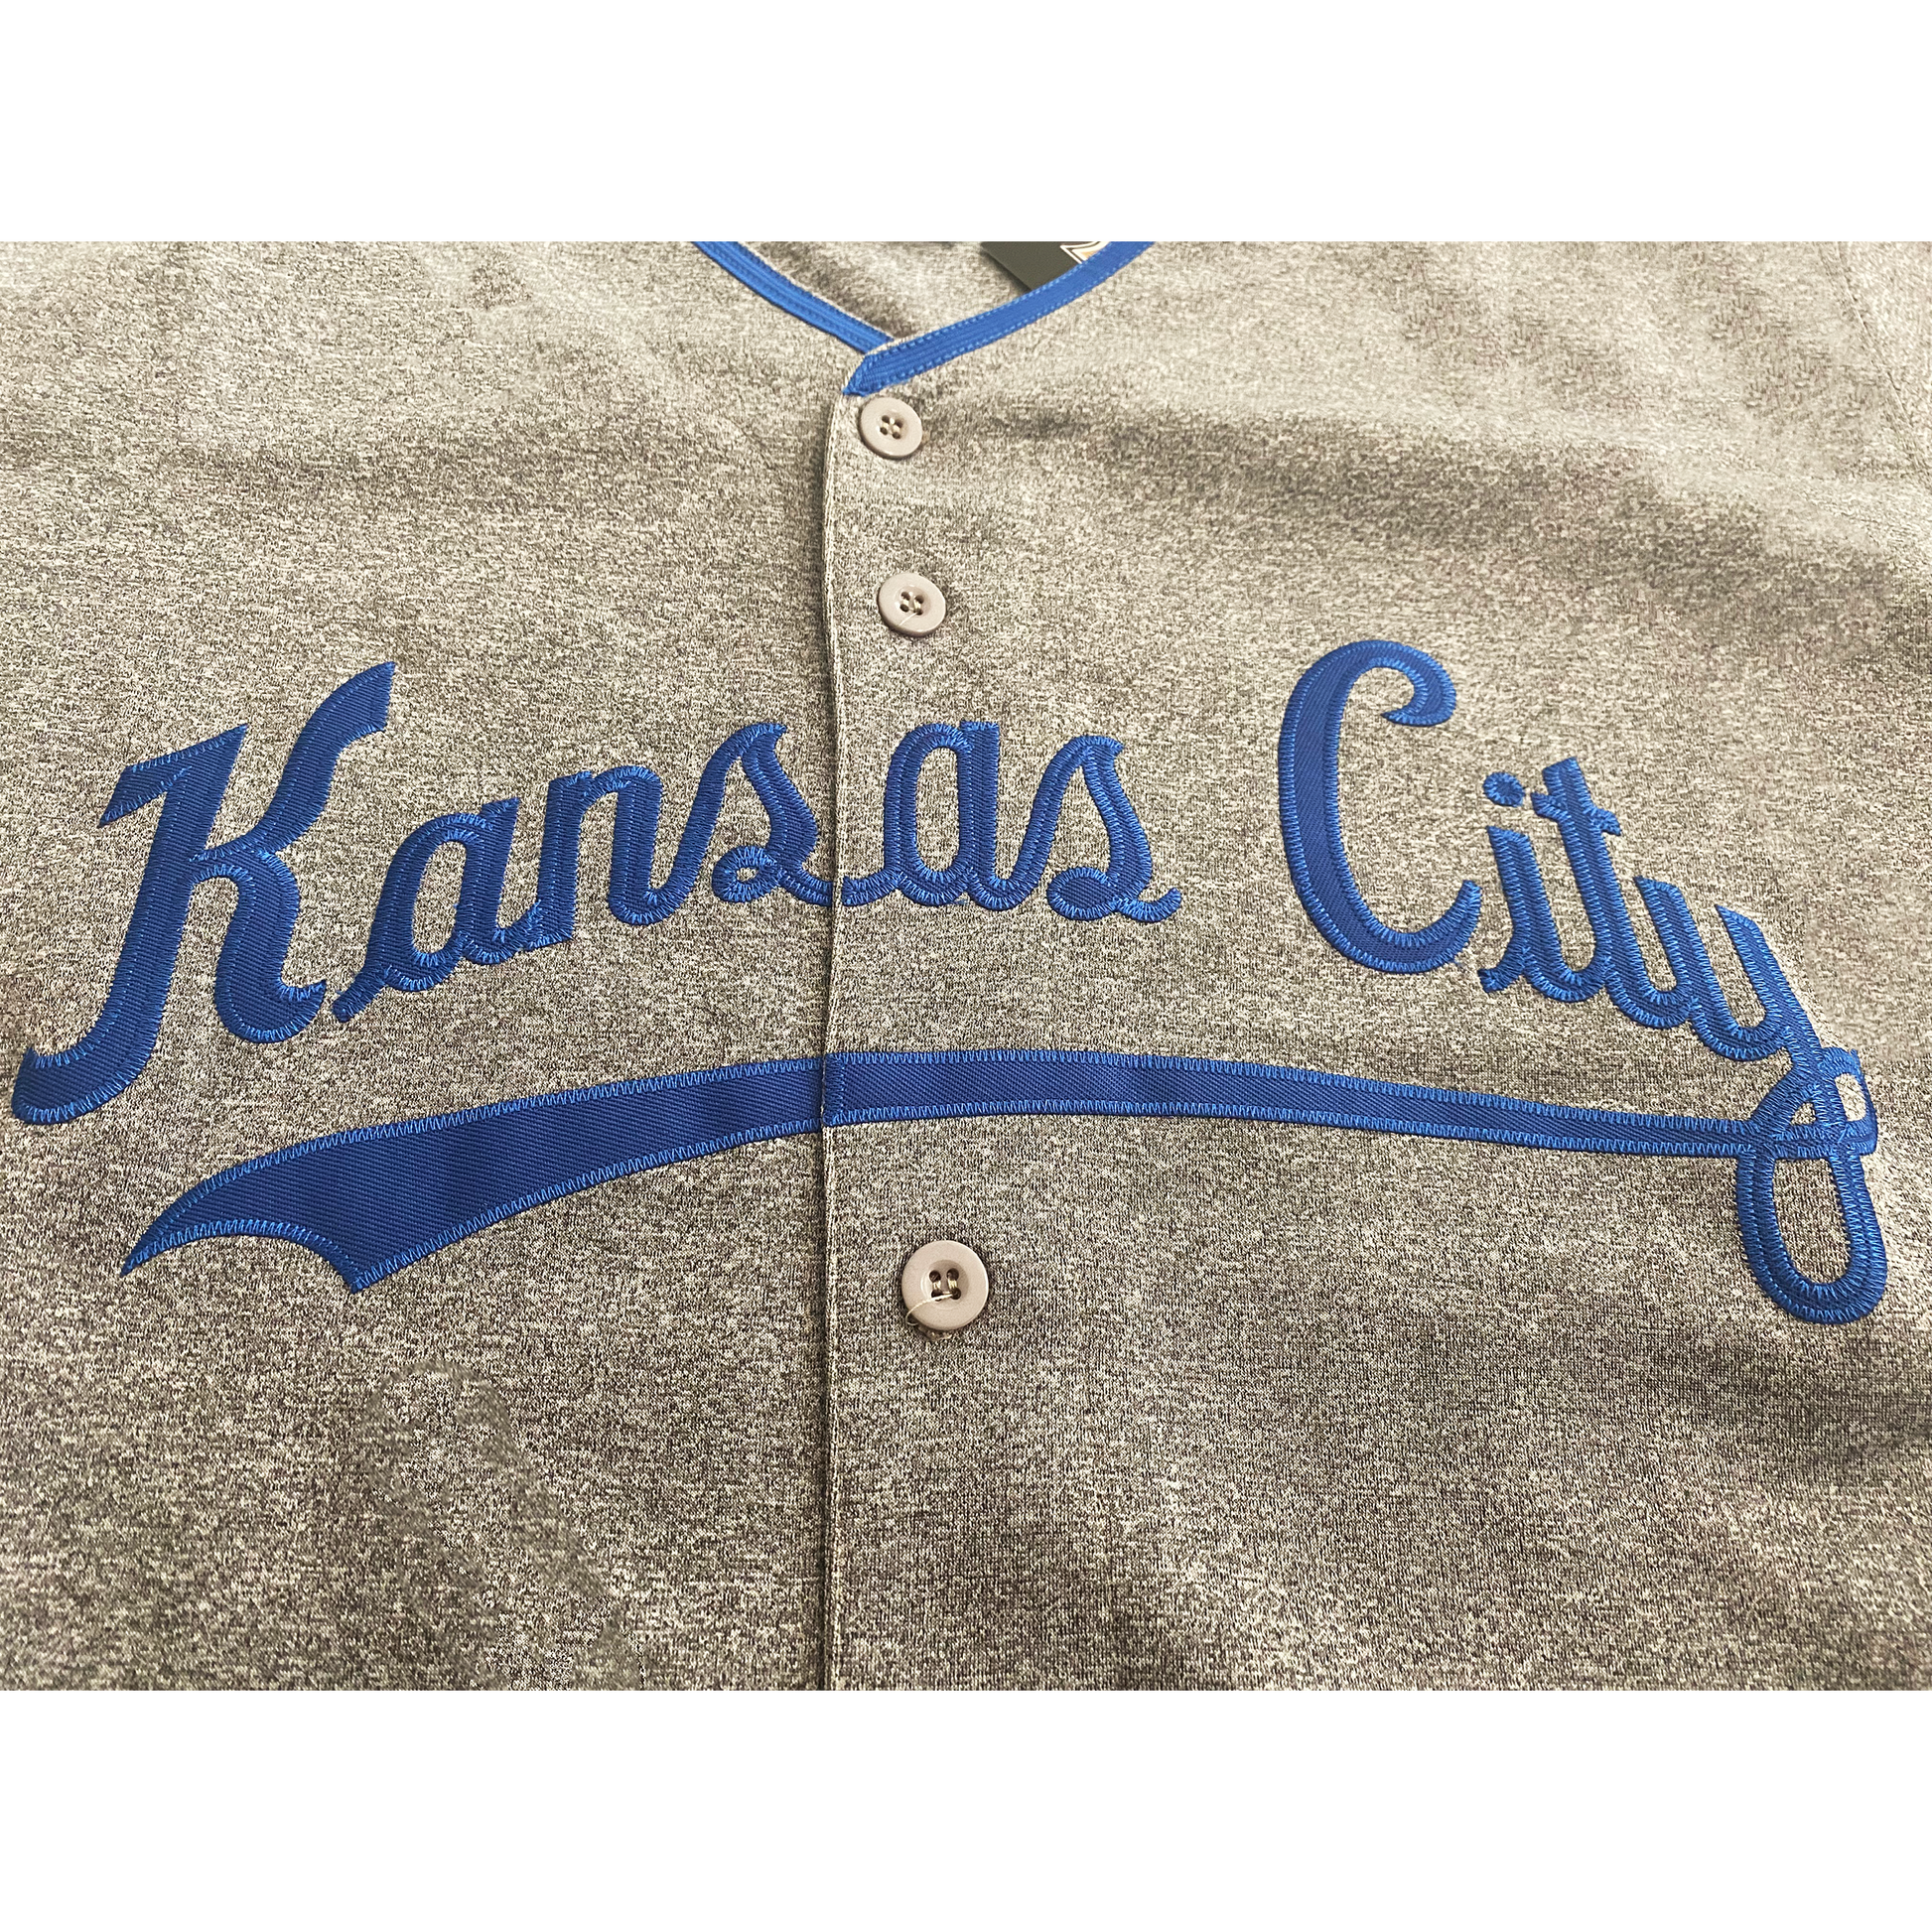 Kansas City Baseball Jersey - Gray/Royal - 5XL - Royal Retros